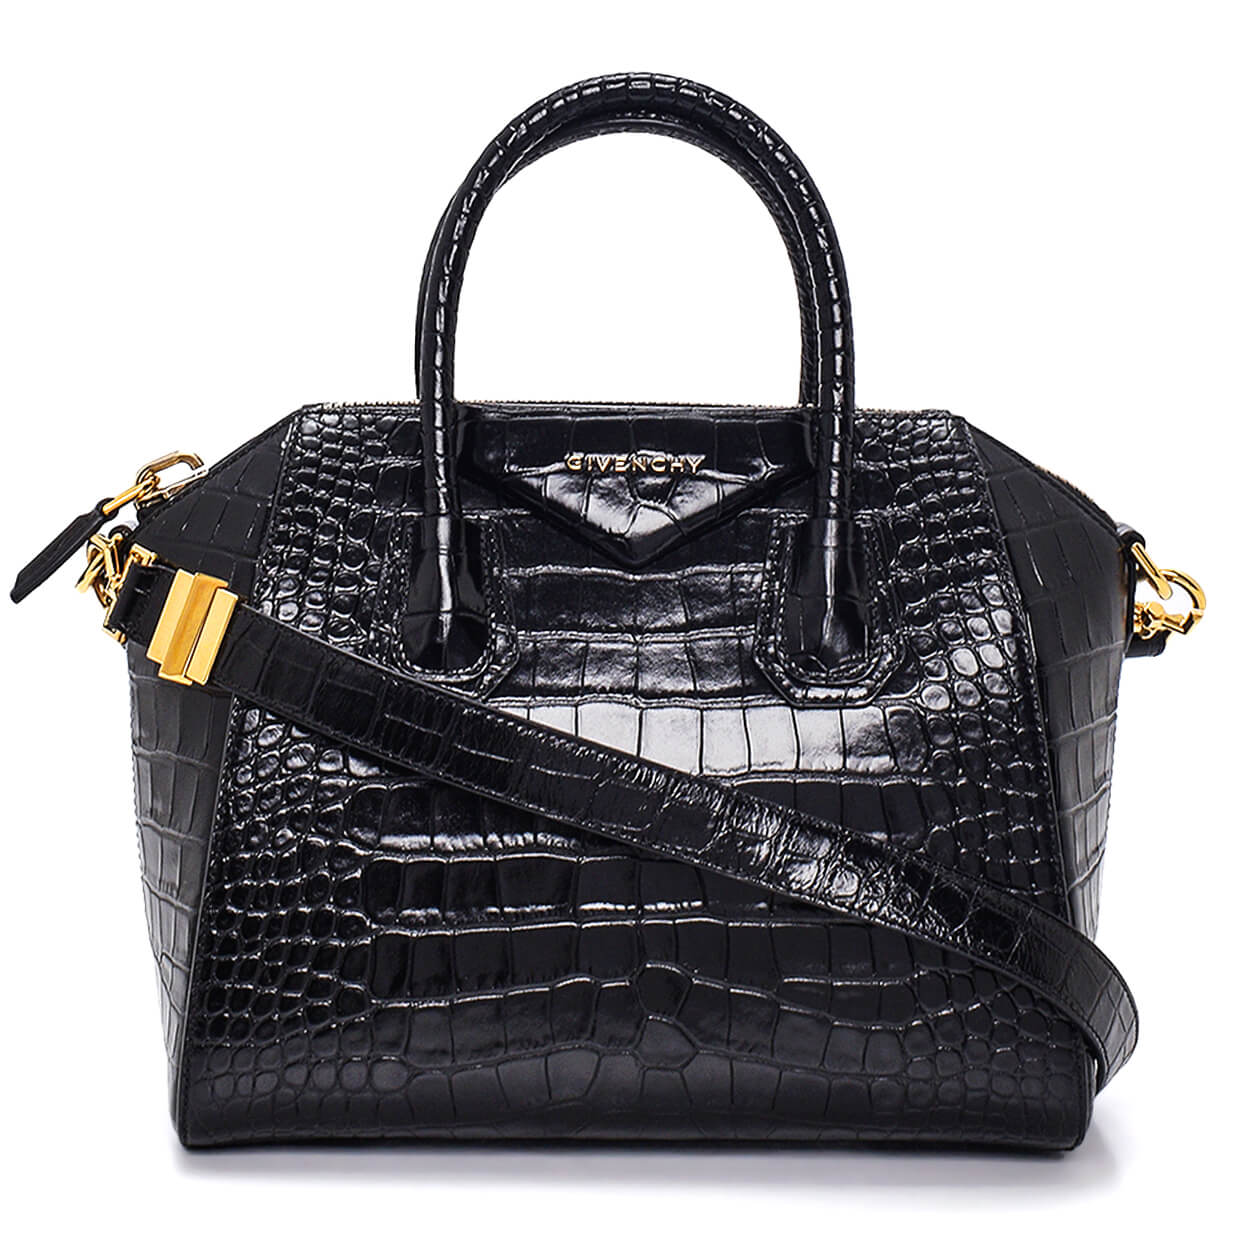 Givenchy - Black Croco Print Leather Small Antigona Bag